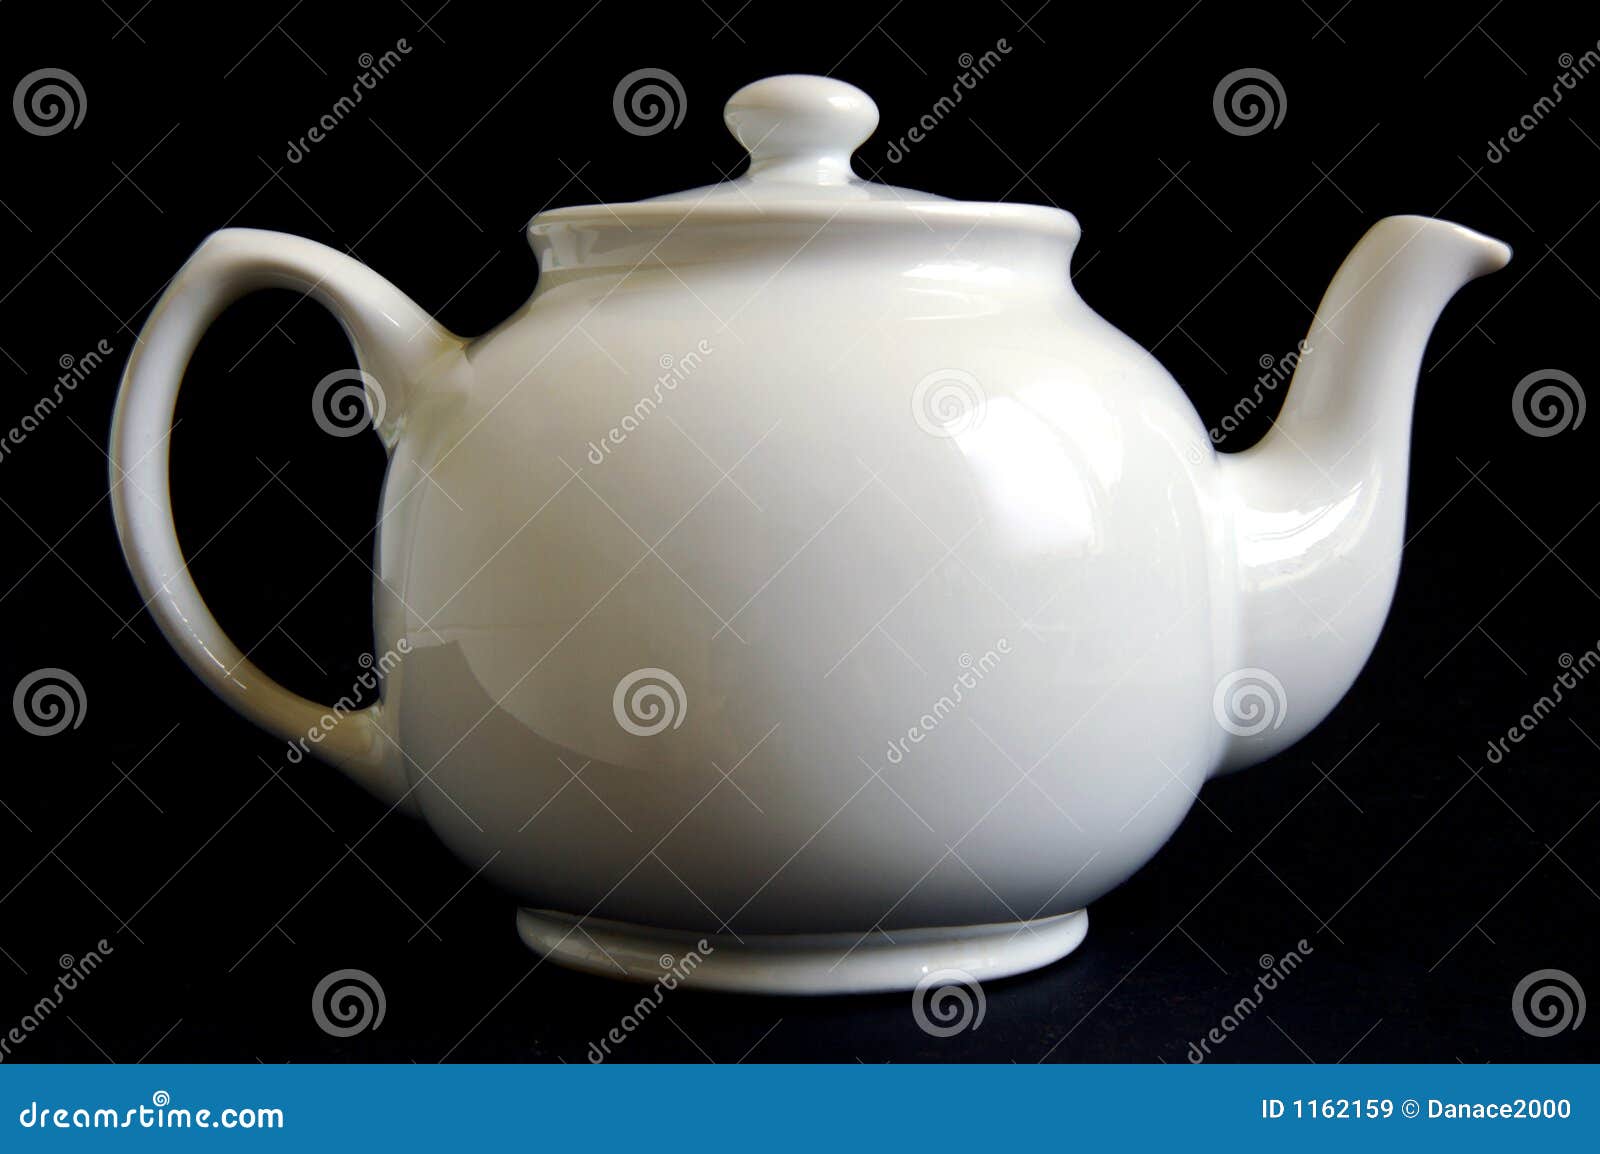 White Teapot Royalty Free Stock Images  Image: 1162159